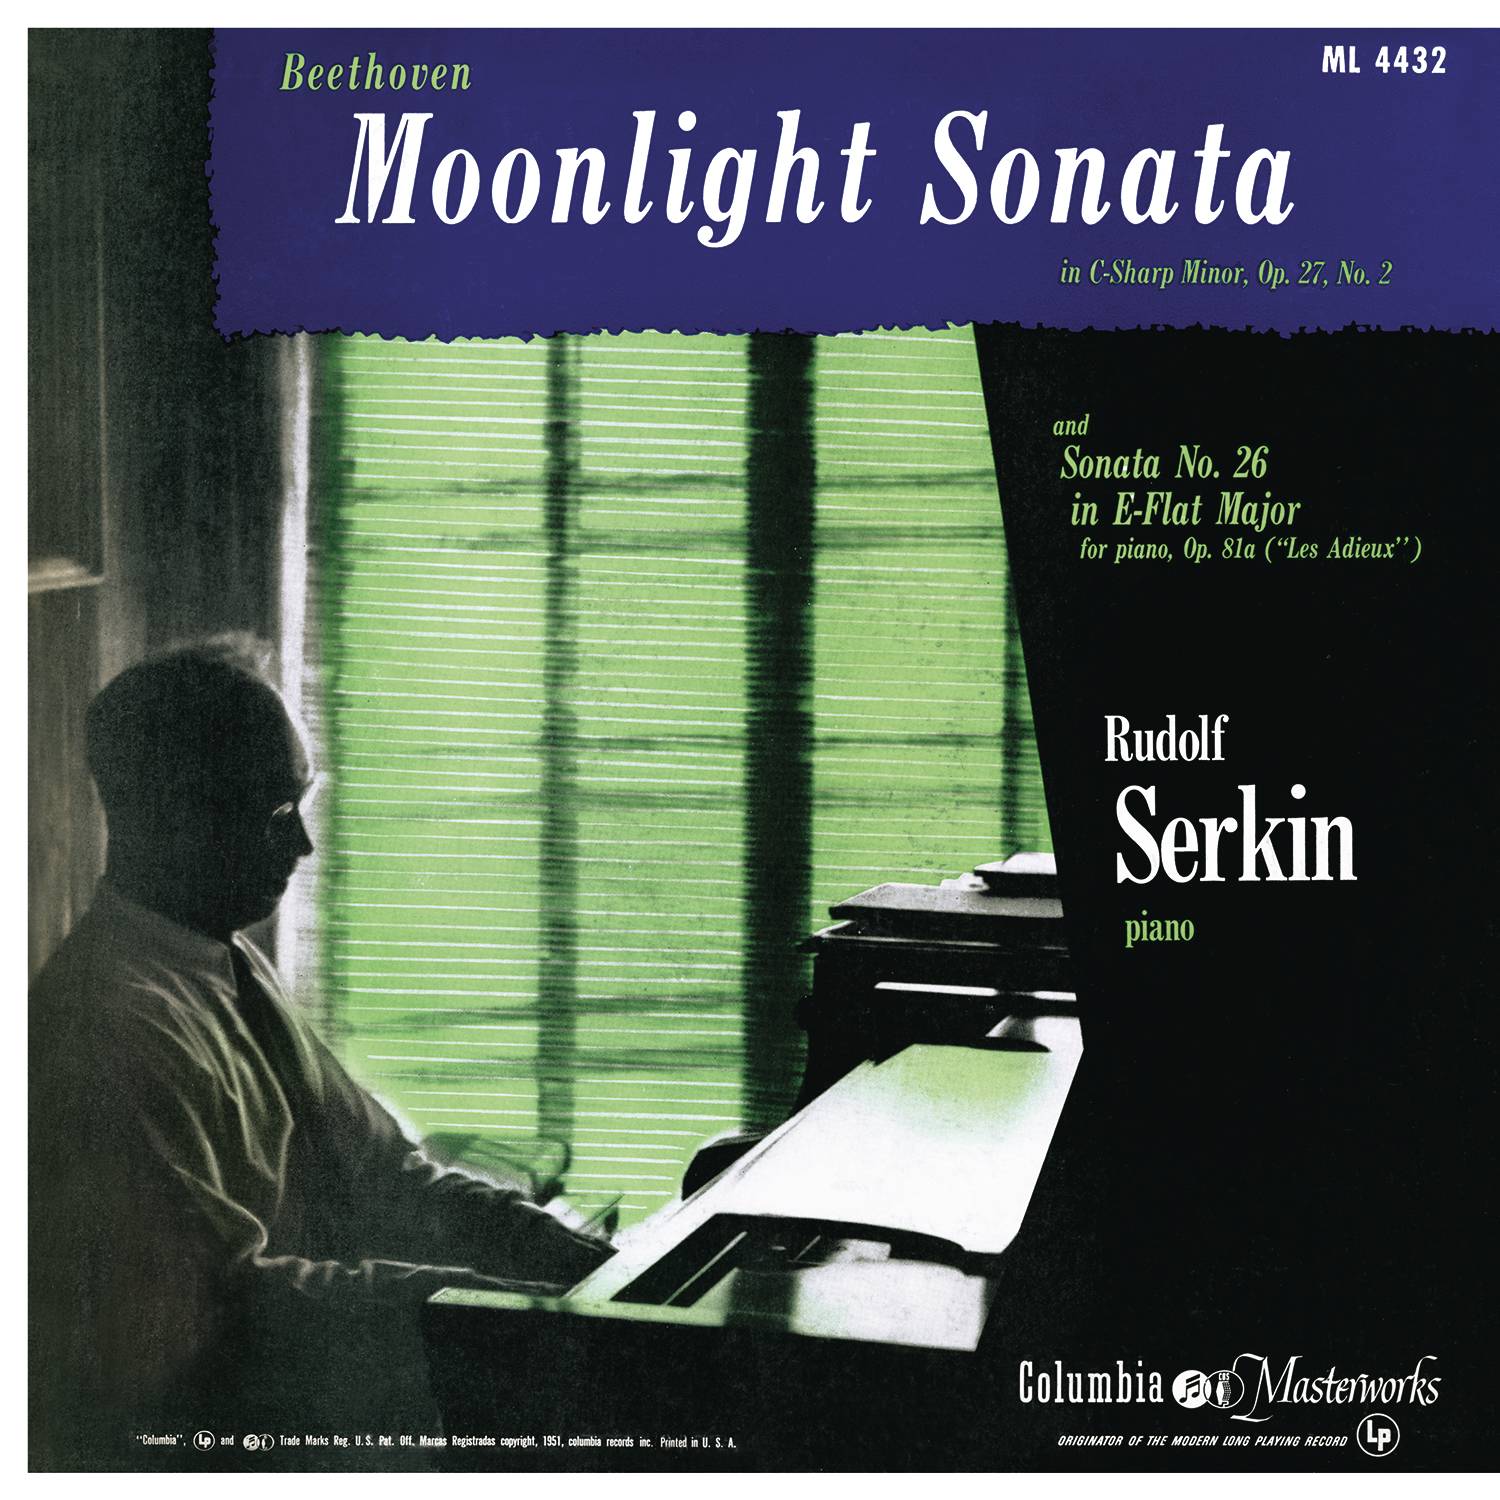 Beethoven: Piano Sonata No. 14, Op. 27 No. 2 "Moonlight", Piano Sonata No. 26, Op. 81a "Les Adieux" & Piano Sonata No. 23, Op. 57 "Appassionata"